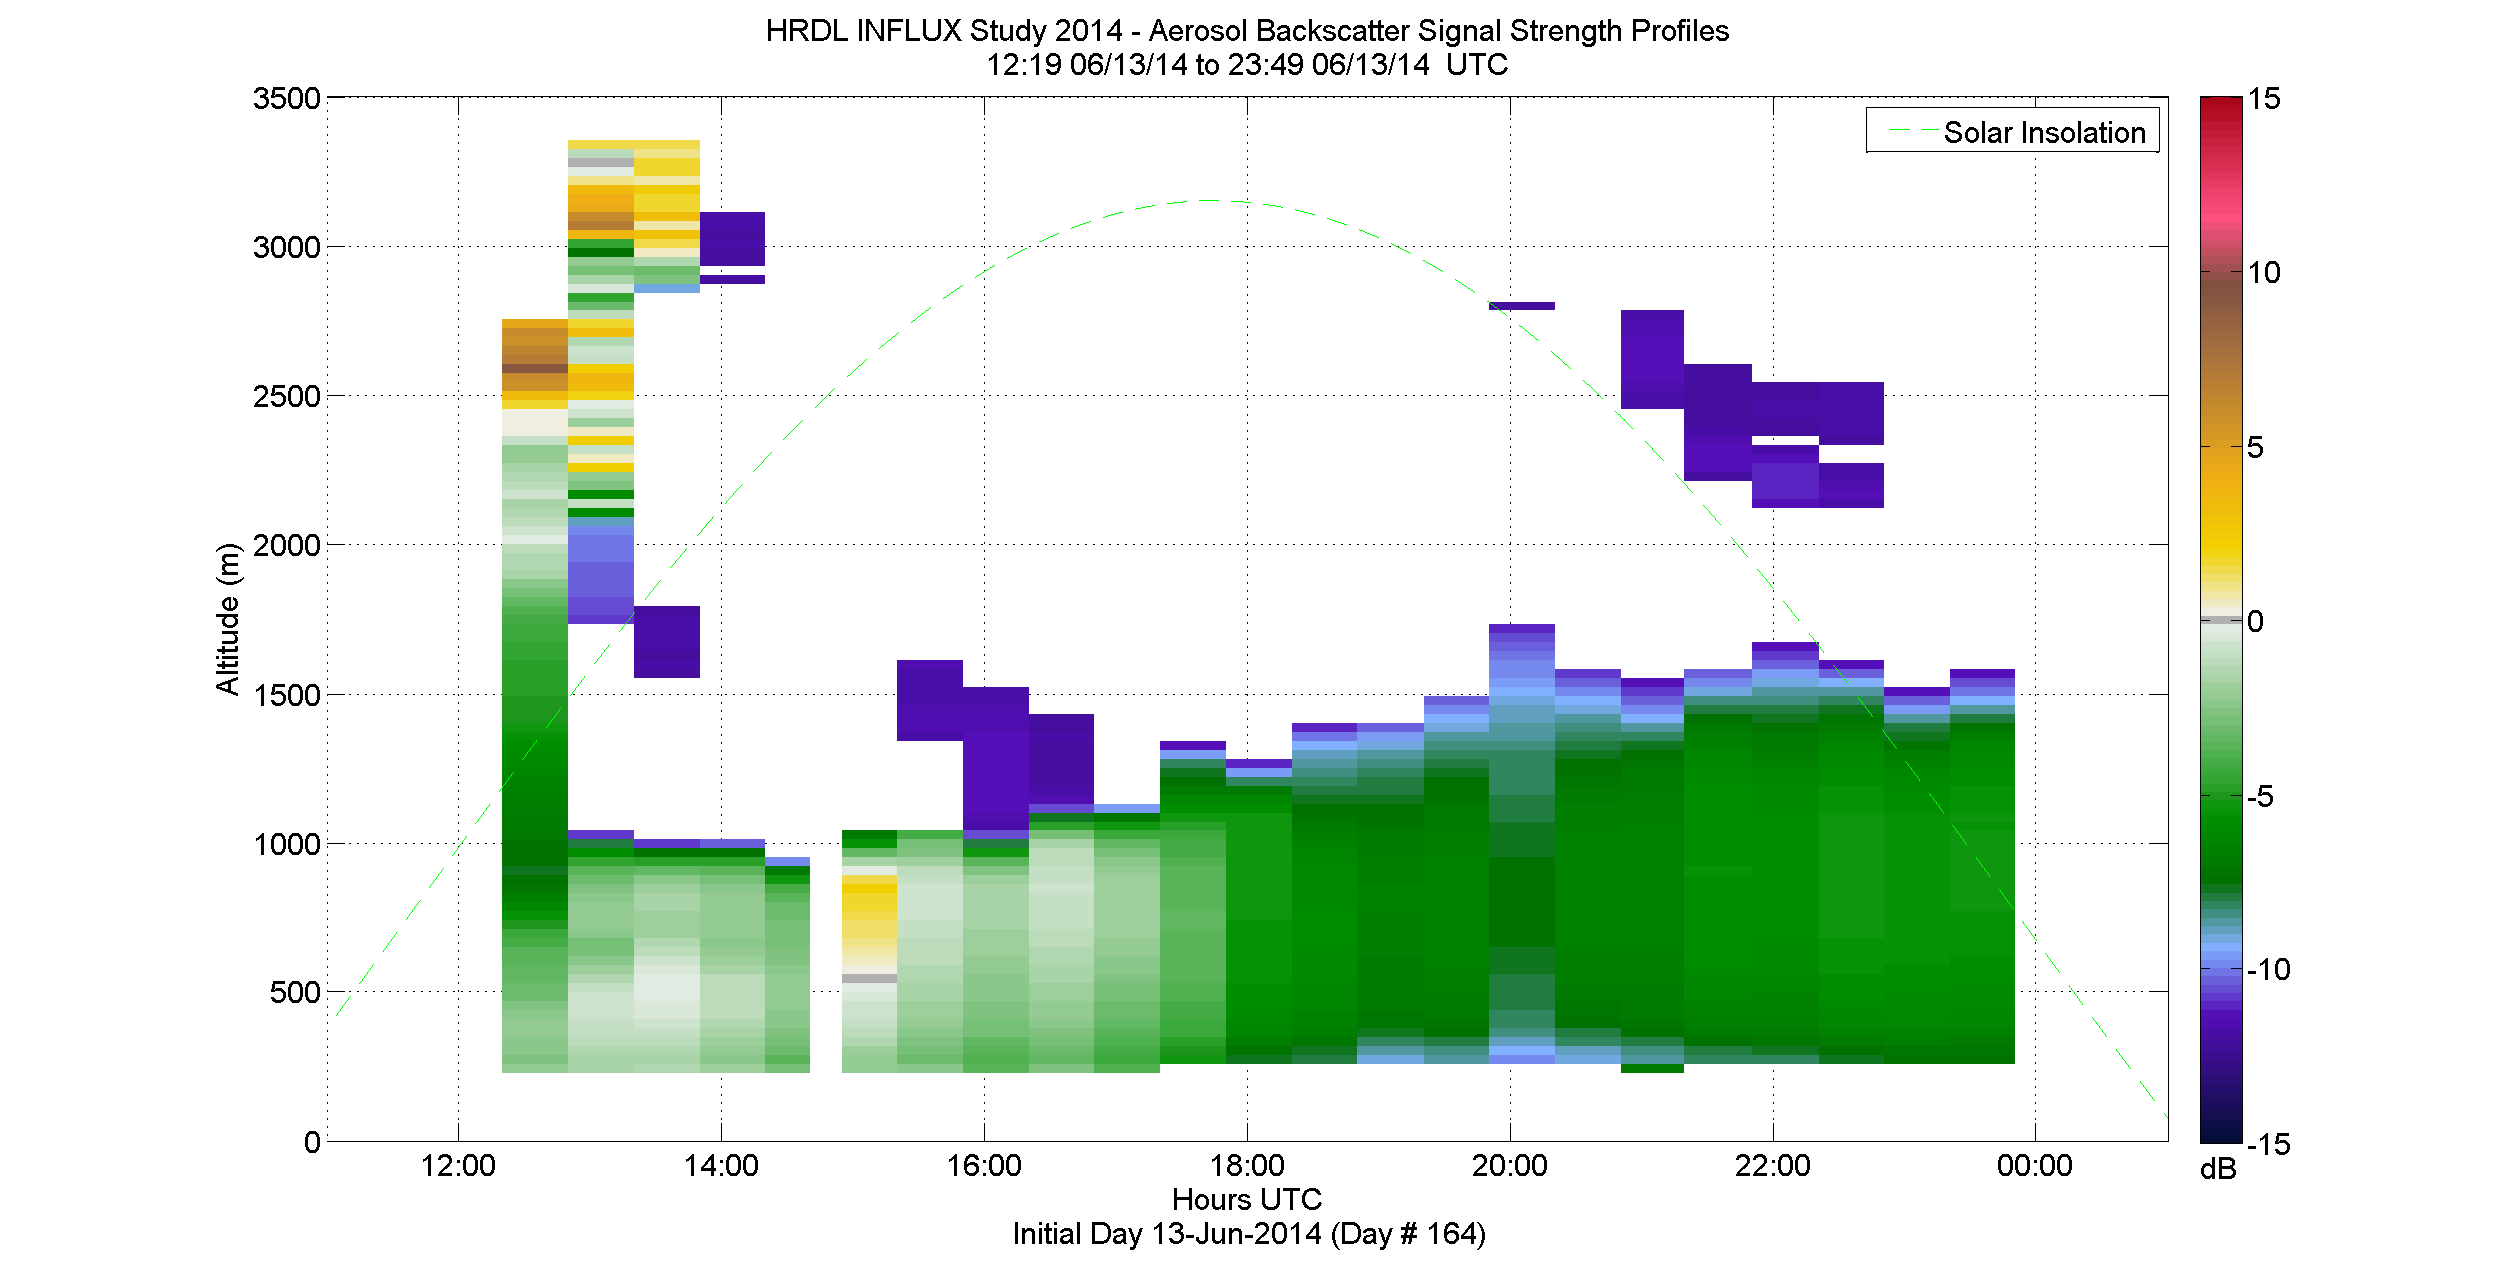 HRDL aerosol backscatter signal strength profile - June 13 pm